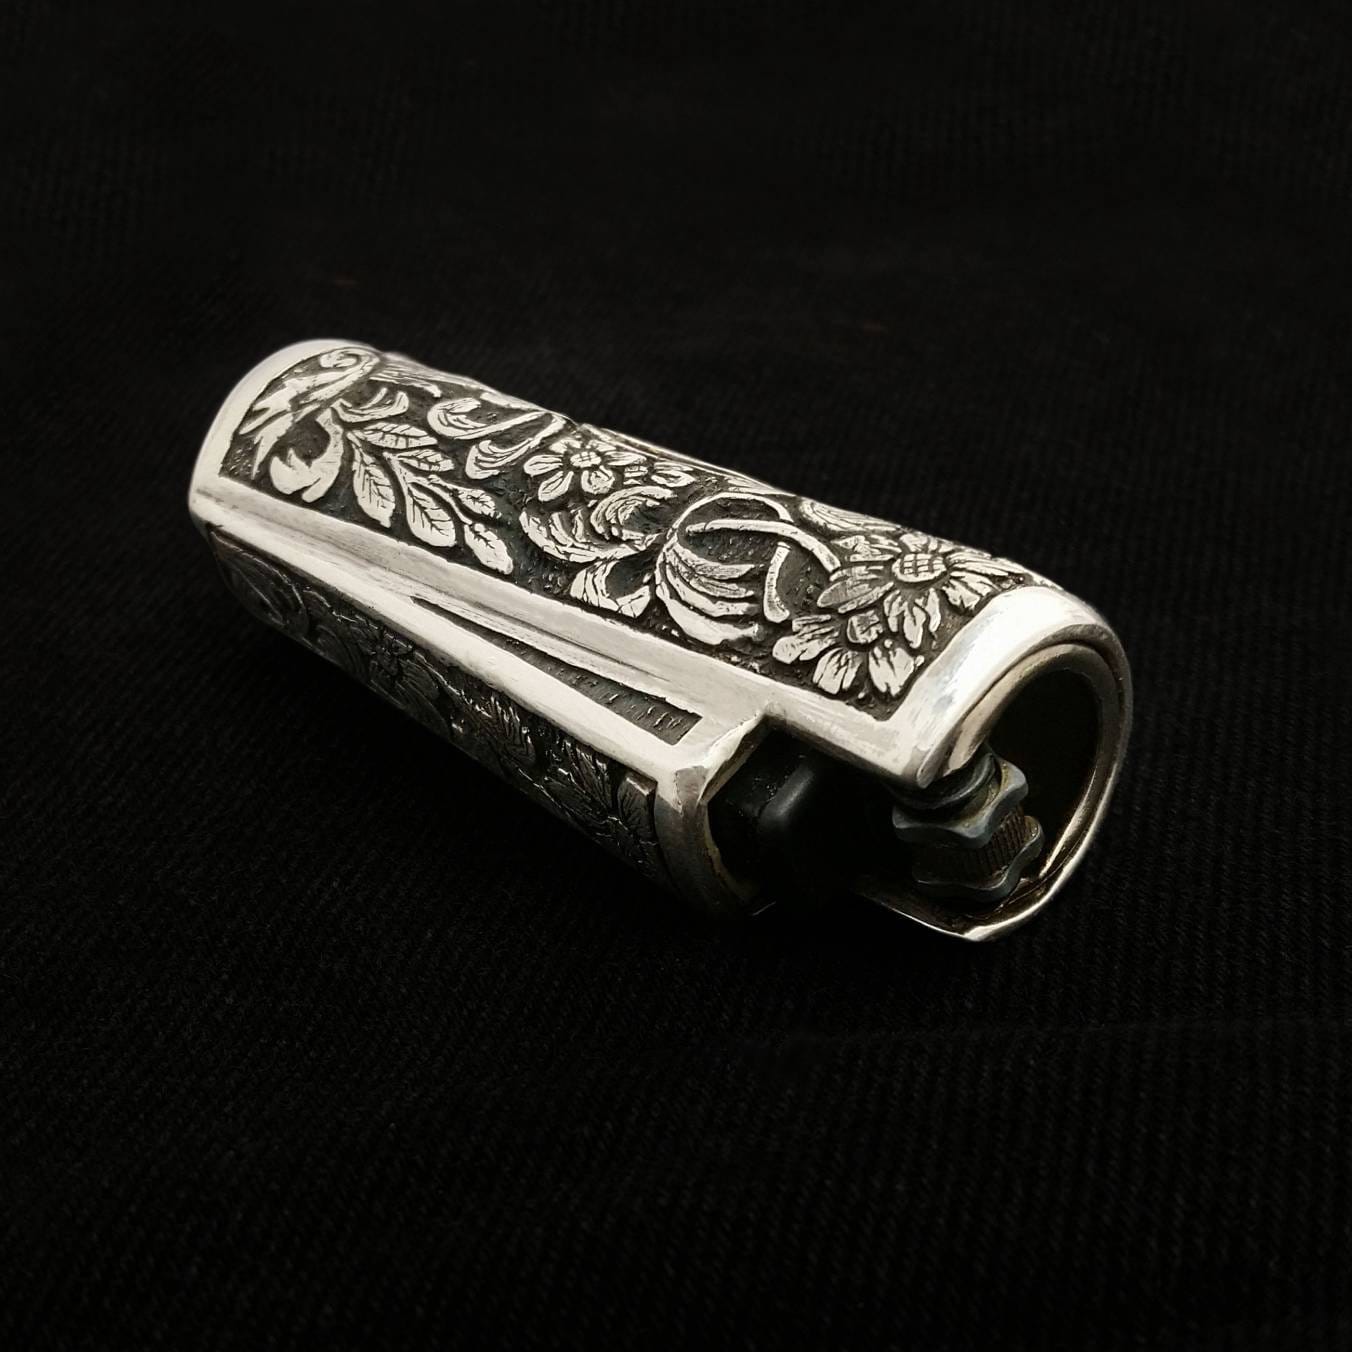 Blank Clipper Metal Lighter Case Customizable Reusable Lighter Cover for  Clipper lighters - Single case (Silver)